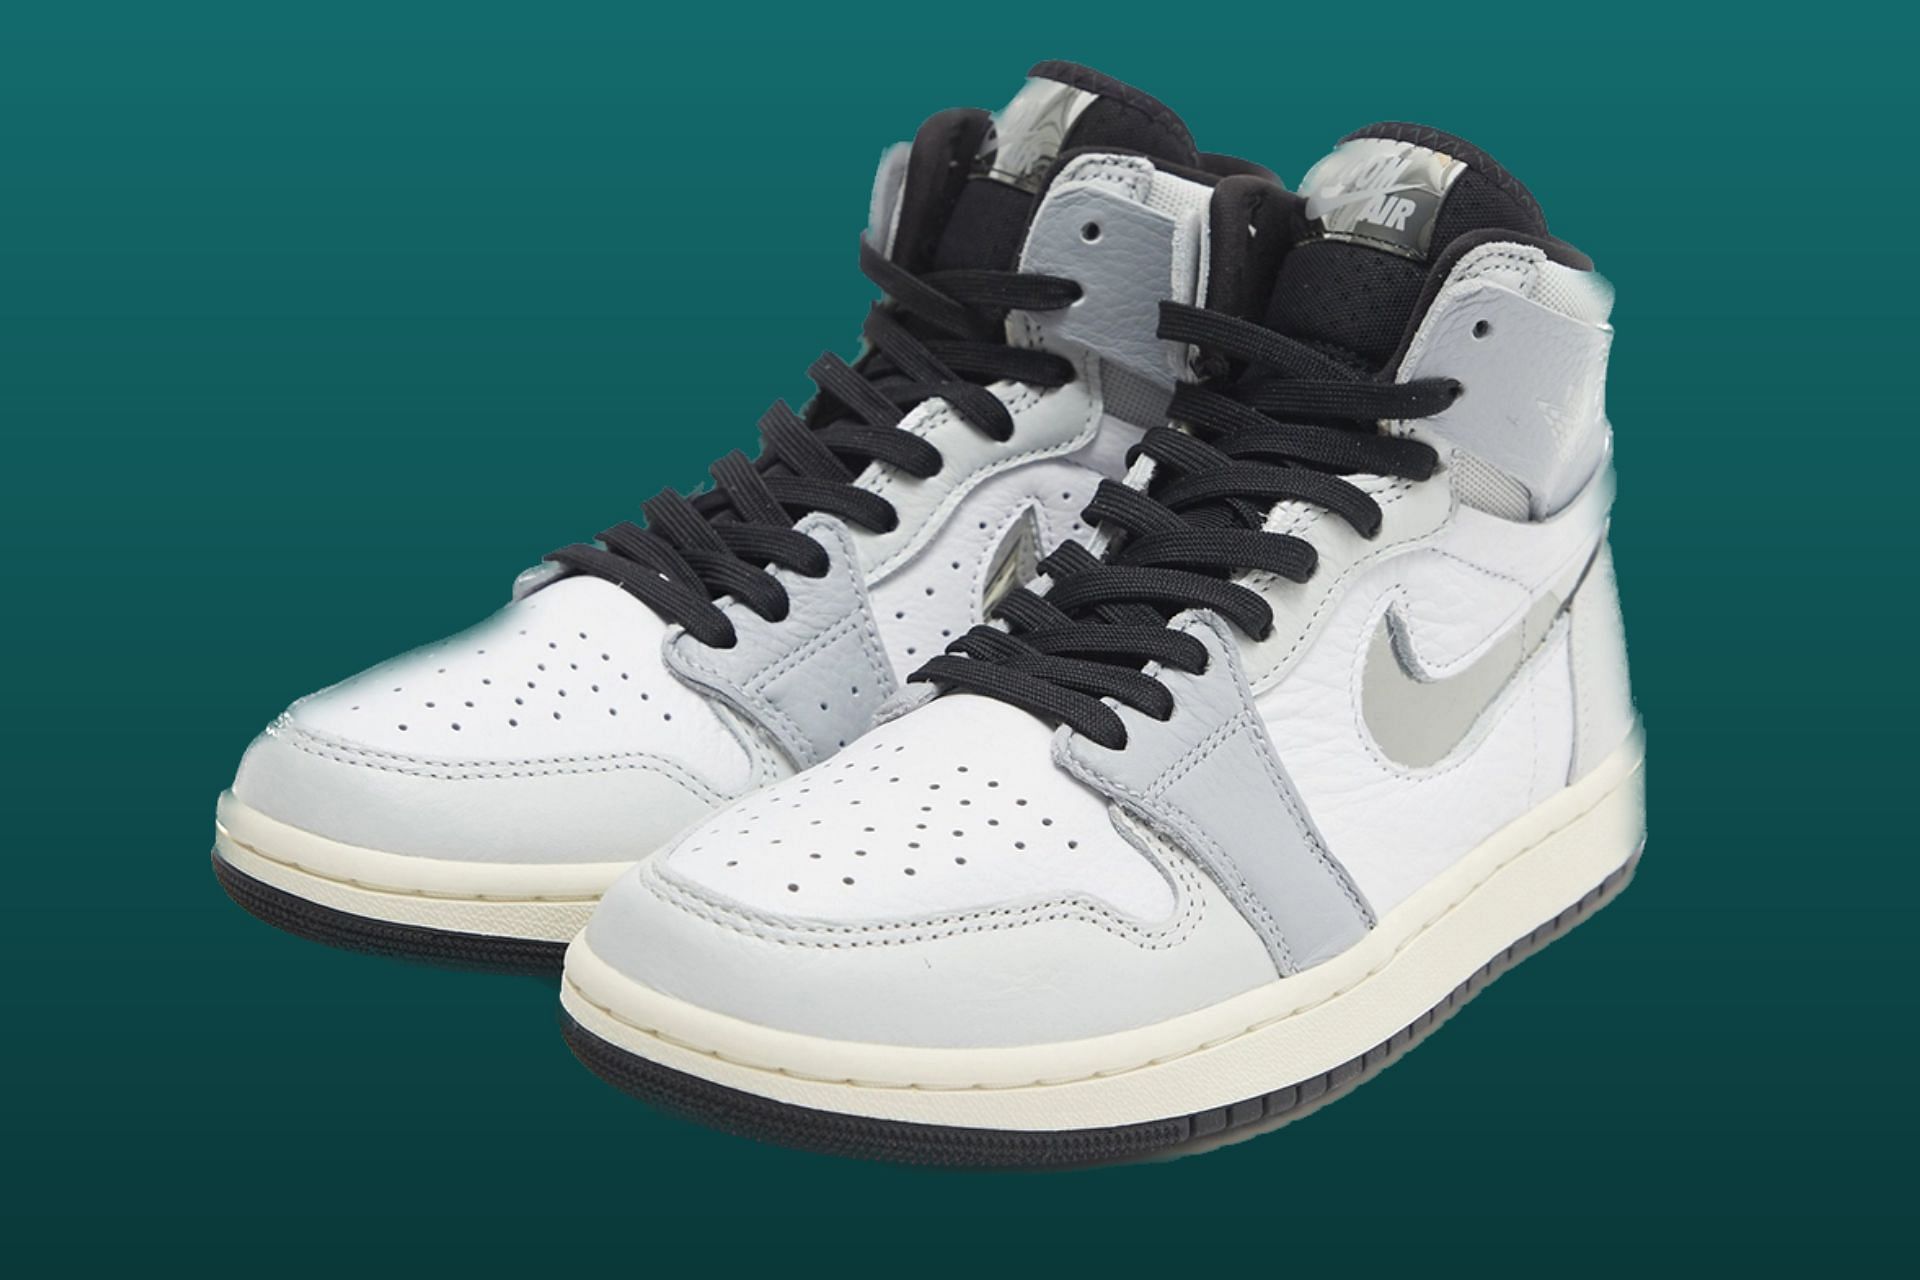 Air Jordan 1 High Zoom CMFT 2 shoes (Image via JD Sports)